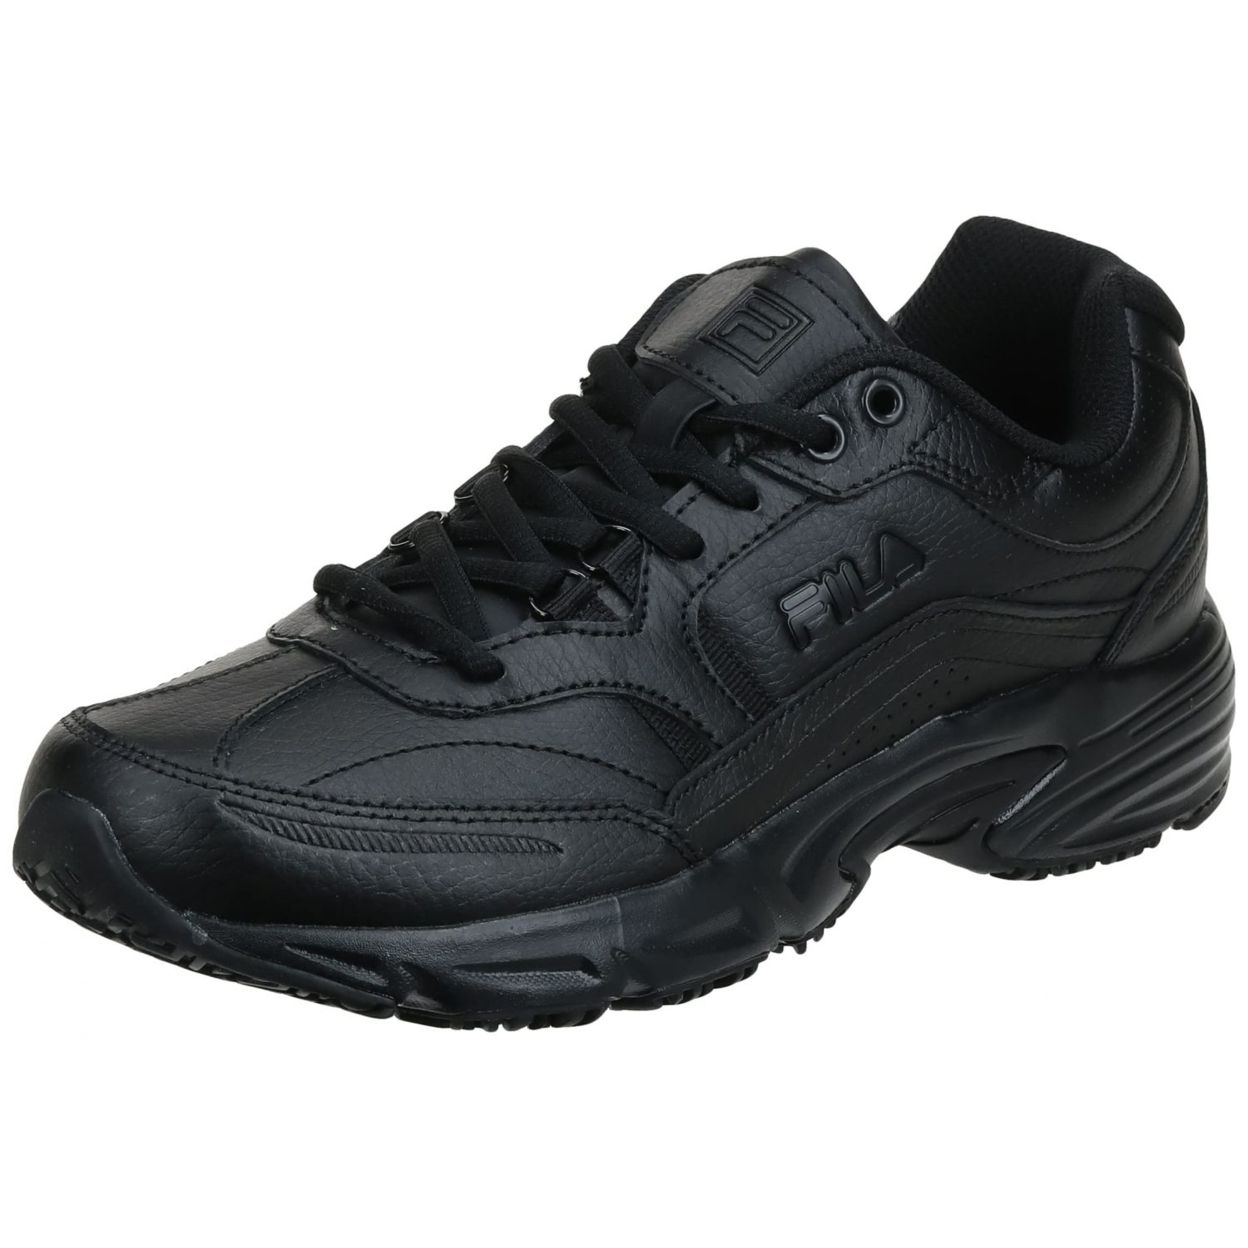 Fila Men's Memory Workshift-m Shoes M US Men - Black/Black/Black, 16 Wide